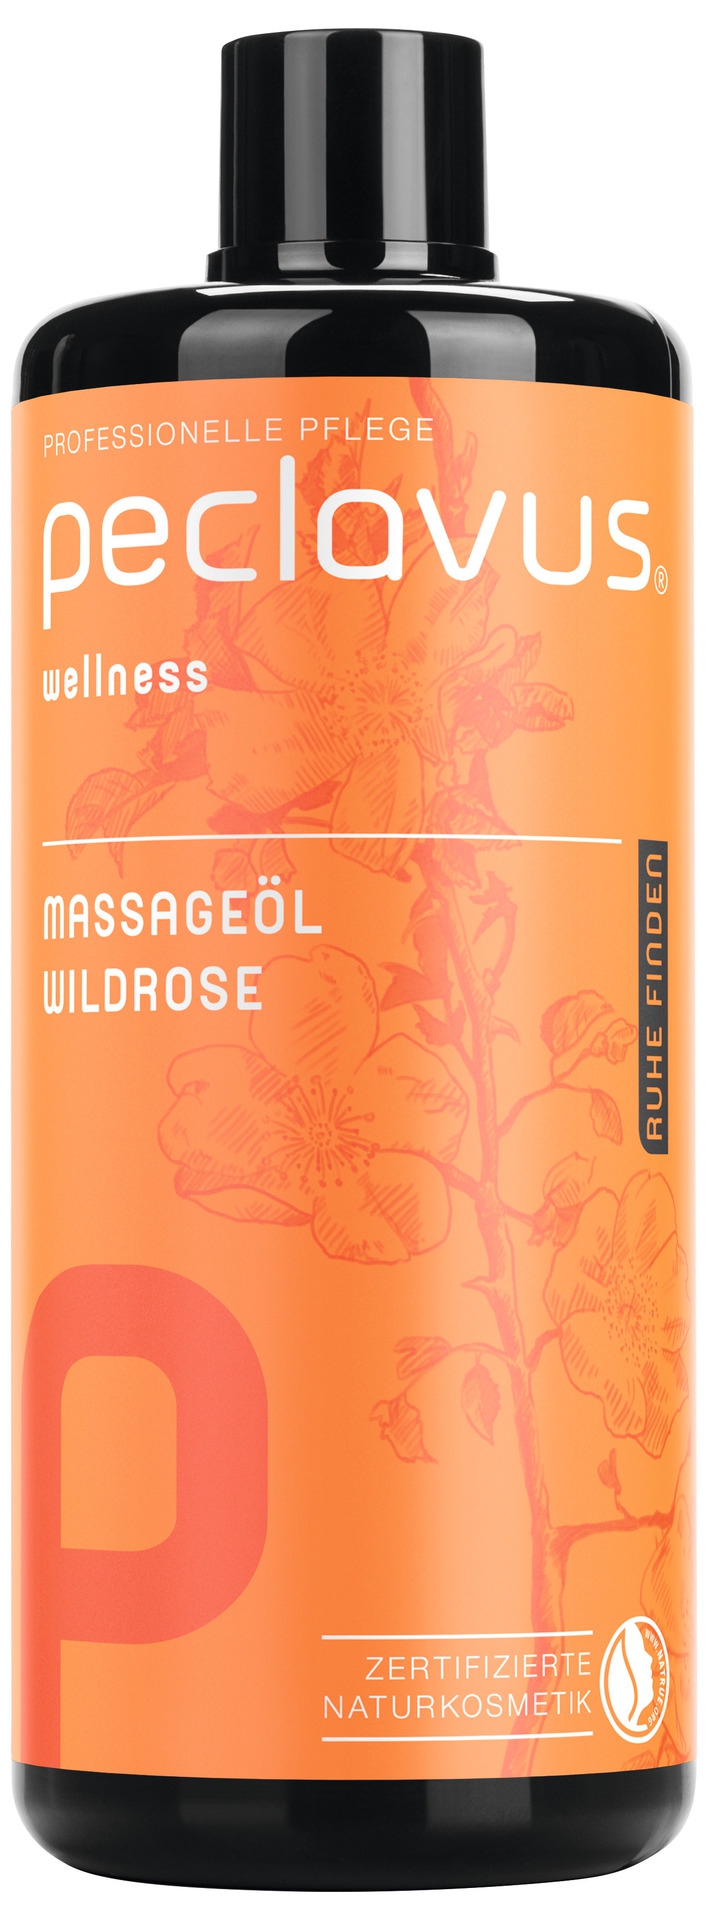 PECLAVUS Massageöl Wildrose 500 ml | Ruhe finden